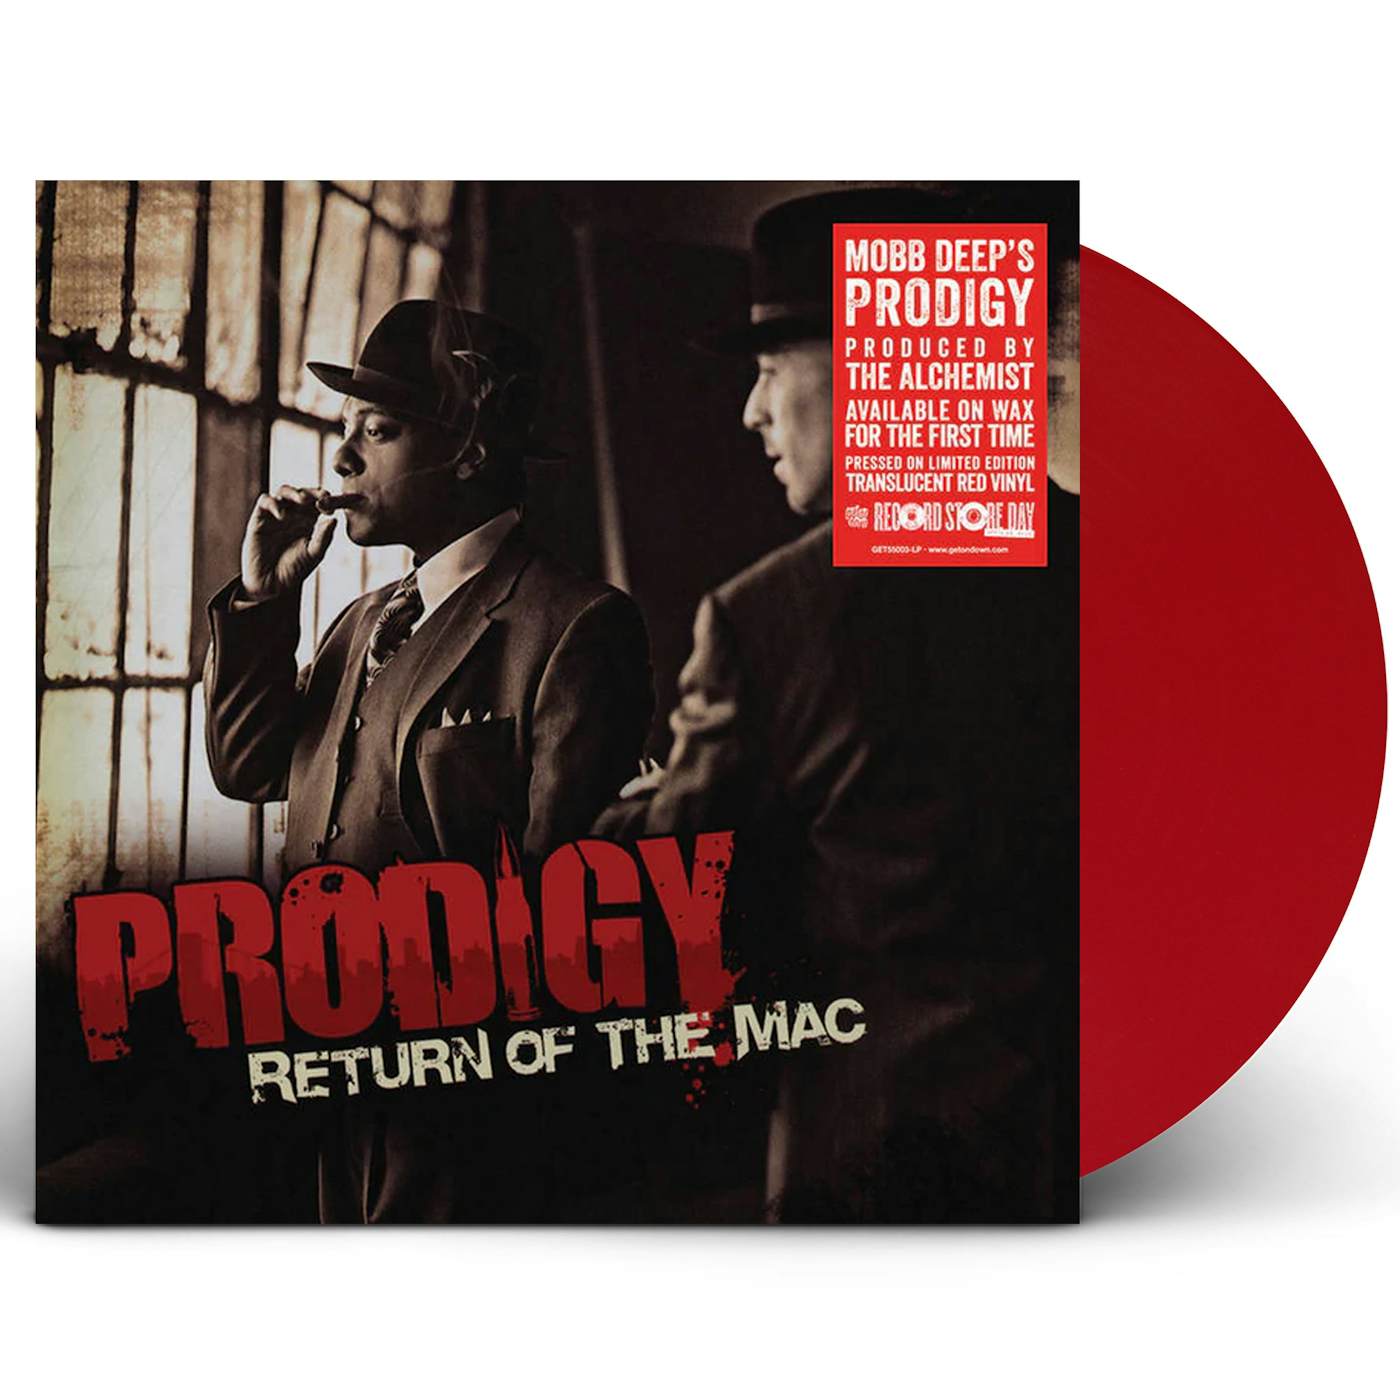 The Prodigy "Return Of The Mac" Red LP Vinyl